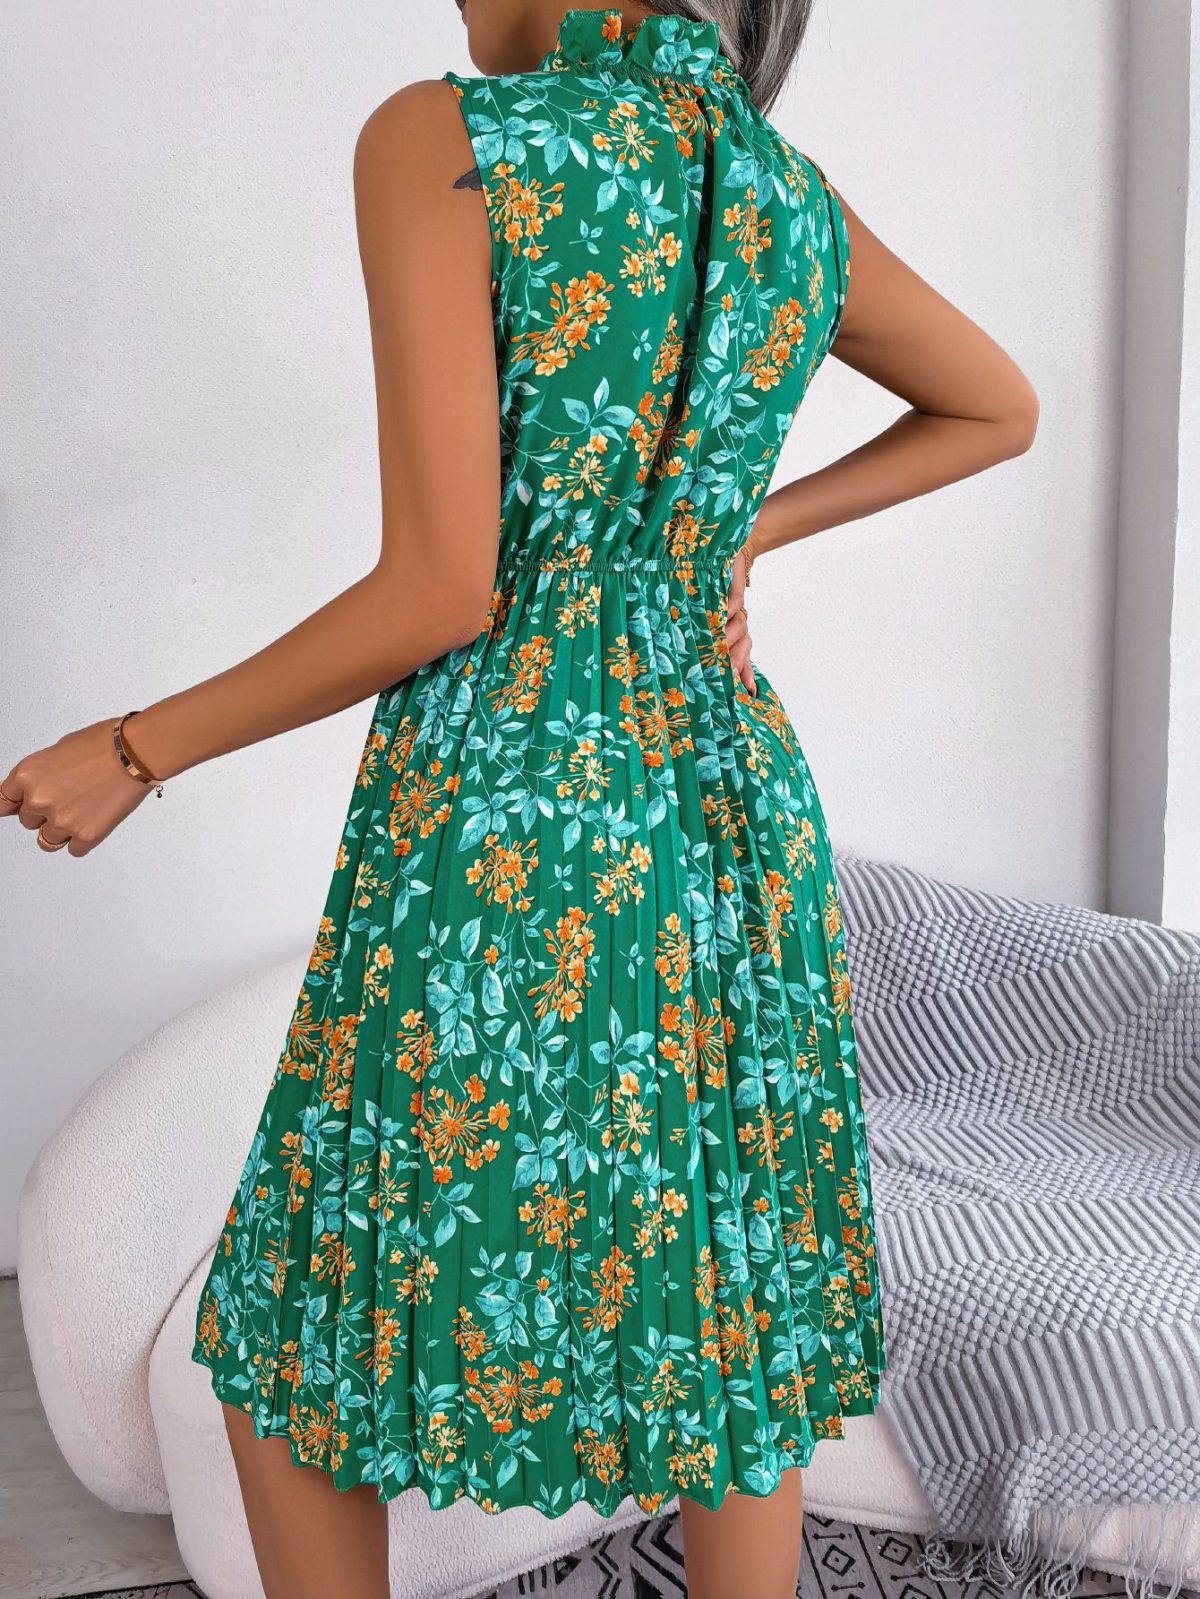 Elegant Floral Pleated Dress in Dresses